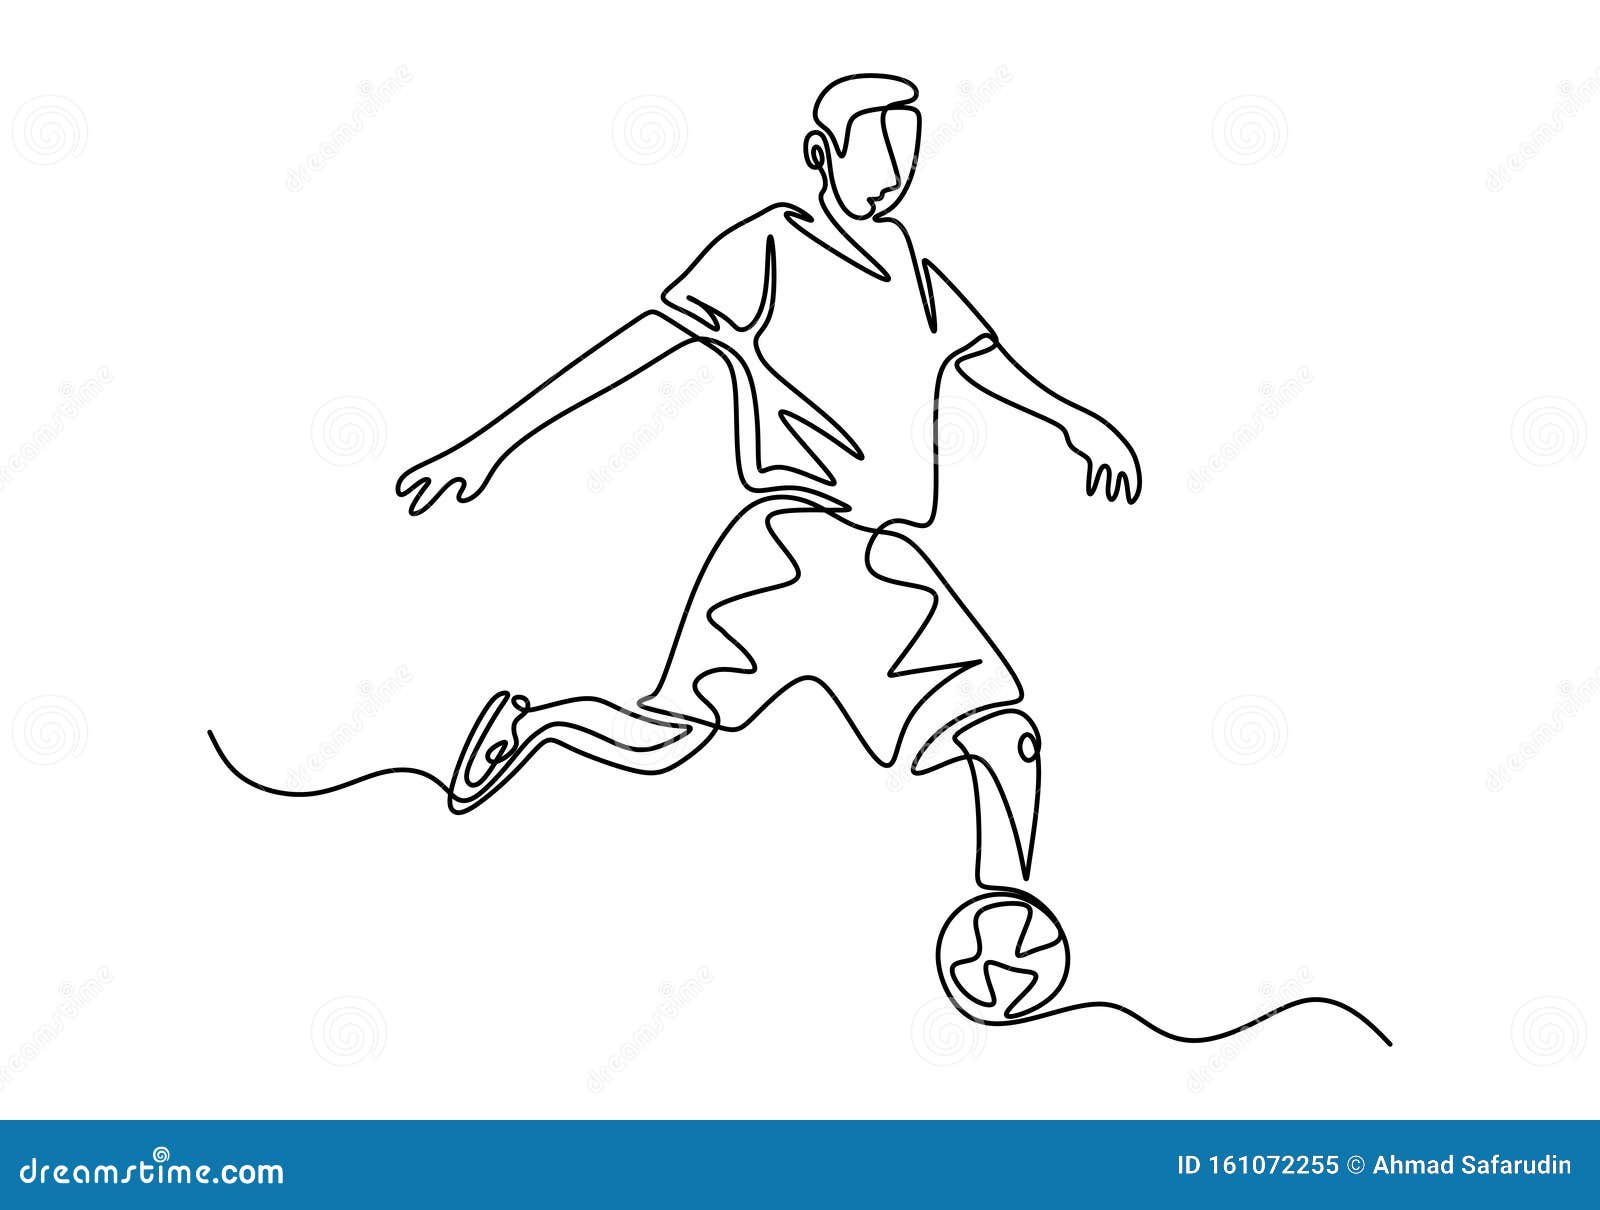 Pencil Drawing Football Match Players Ball Stock Illustration 99935996 |  Shutterstock